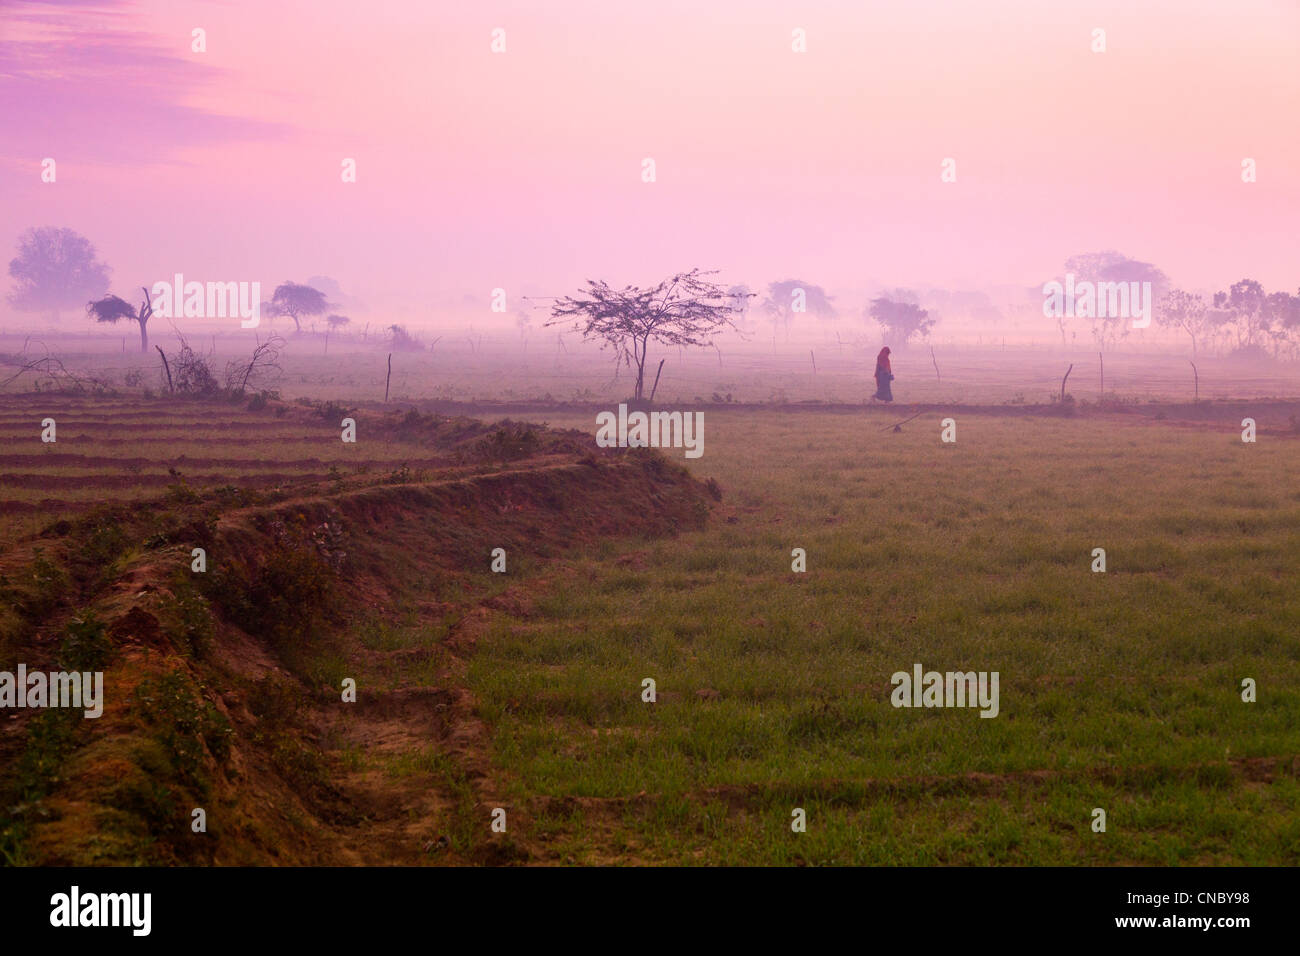 India, Uttar Pradesh, dawn over fields near Agra Stock Photo